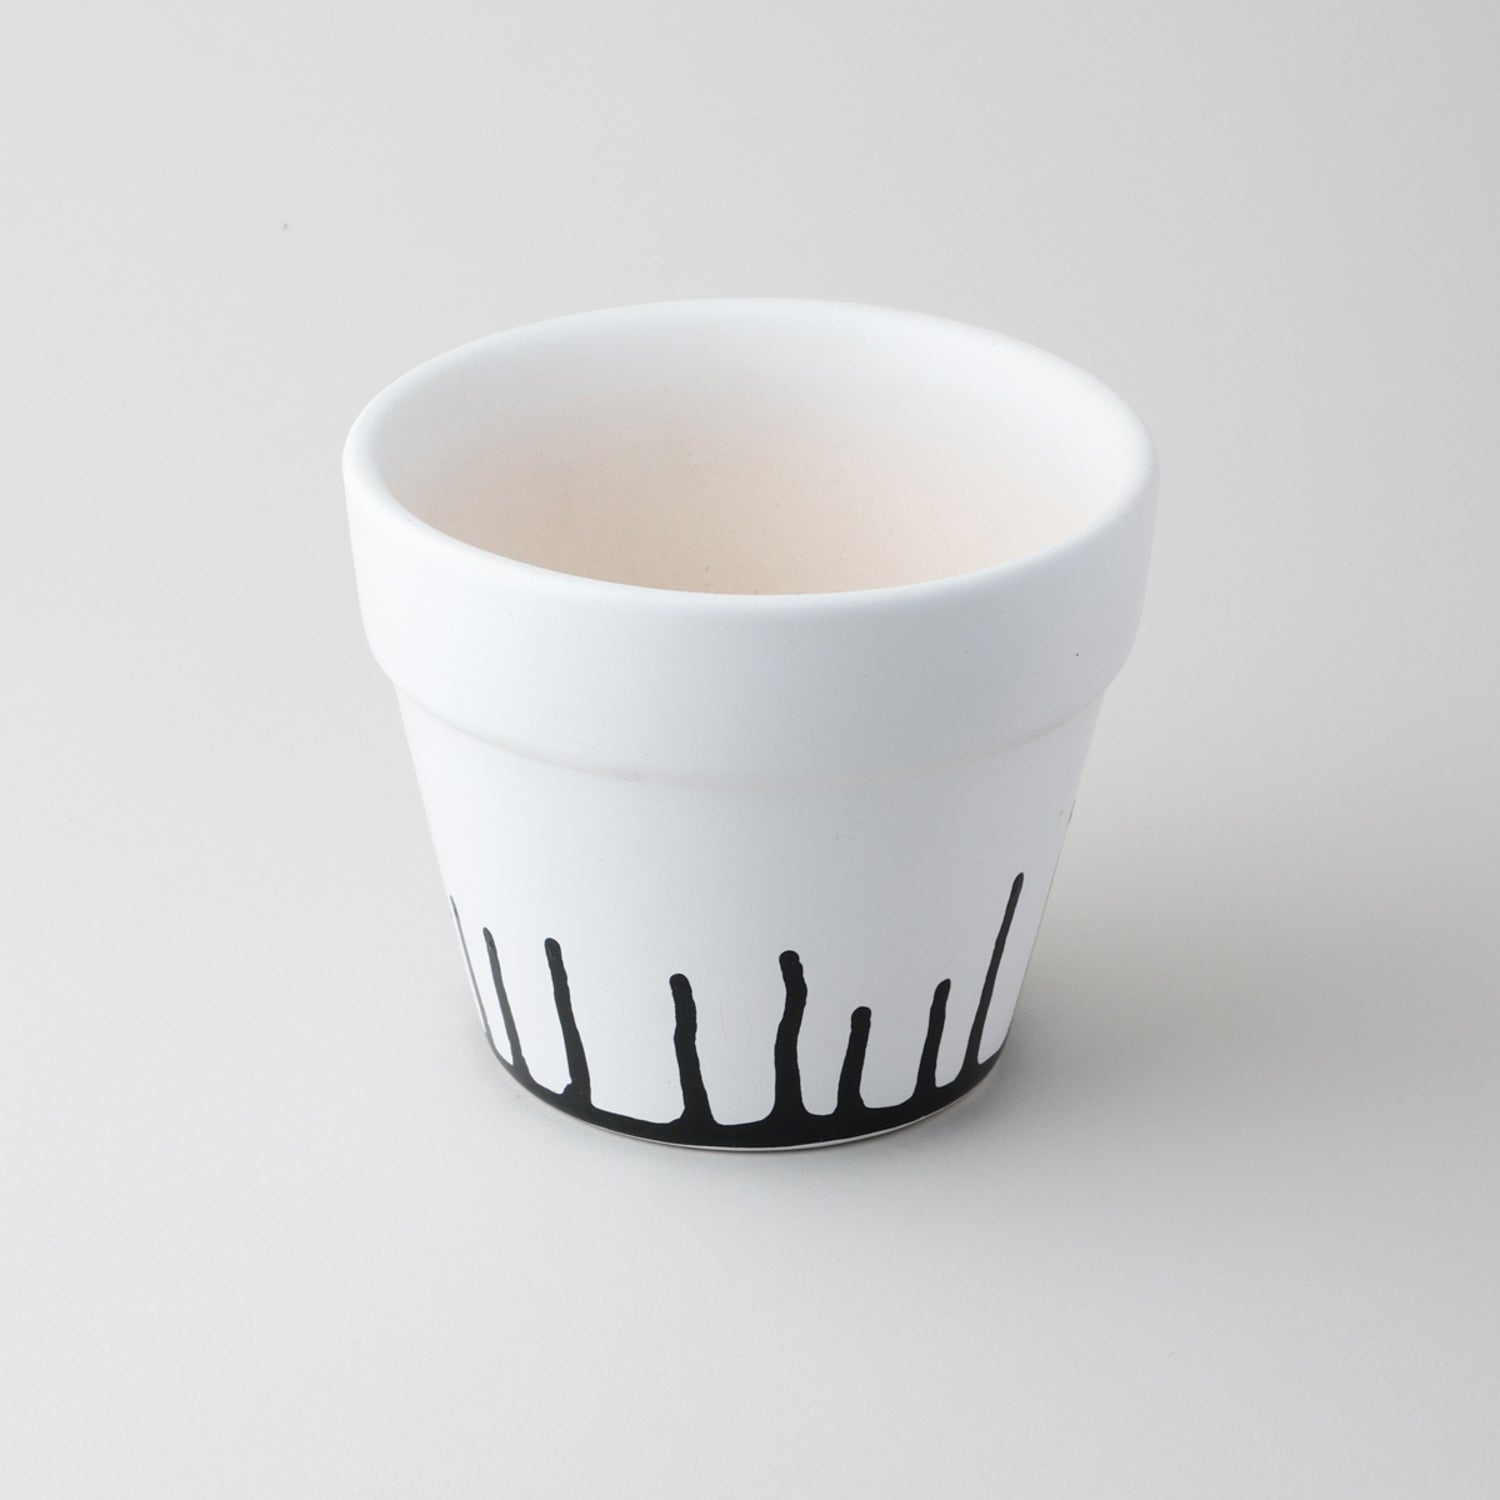 Ceramic Planter White & Black - 4x5